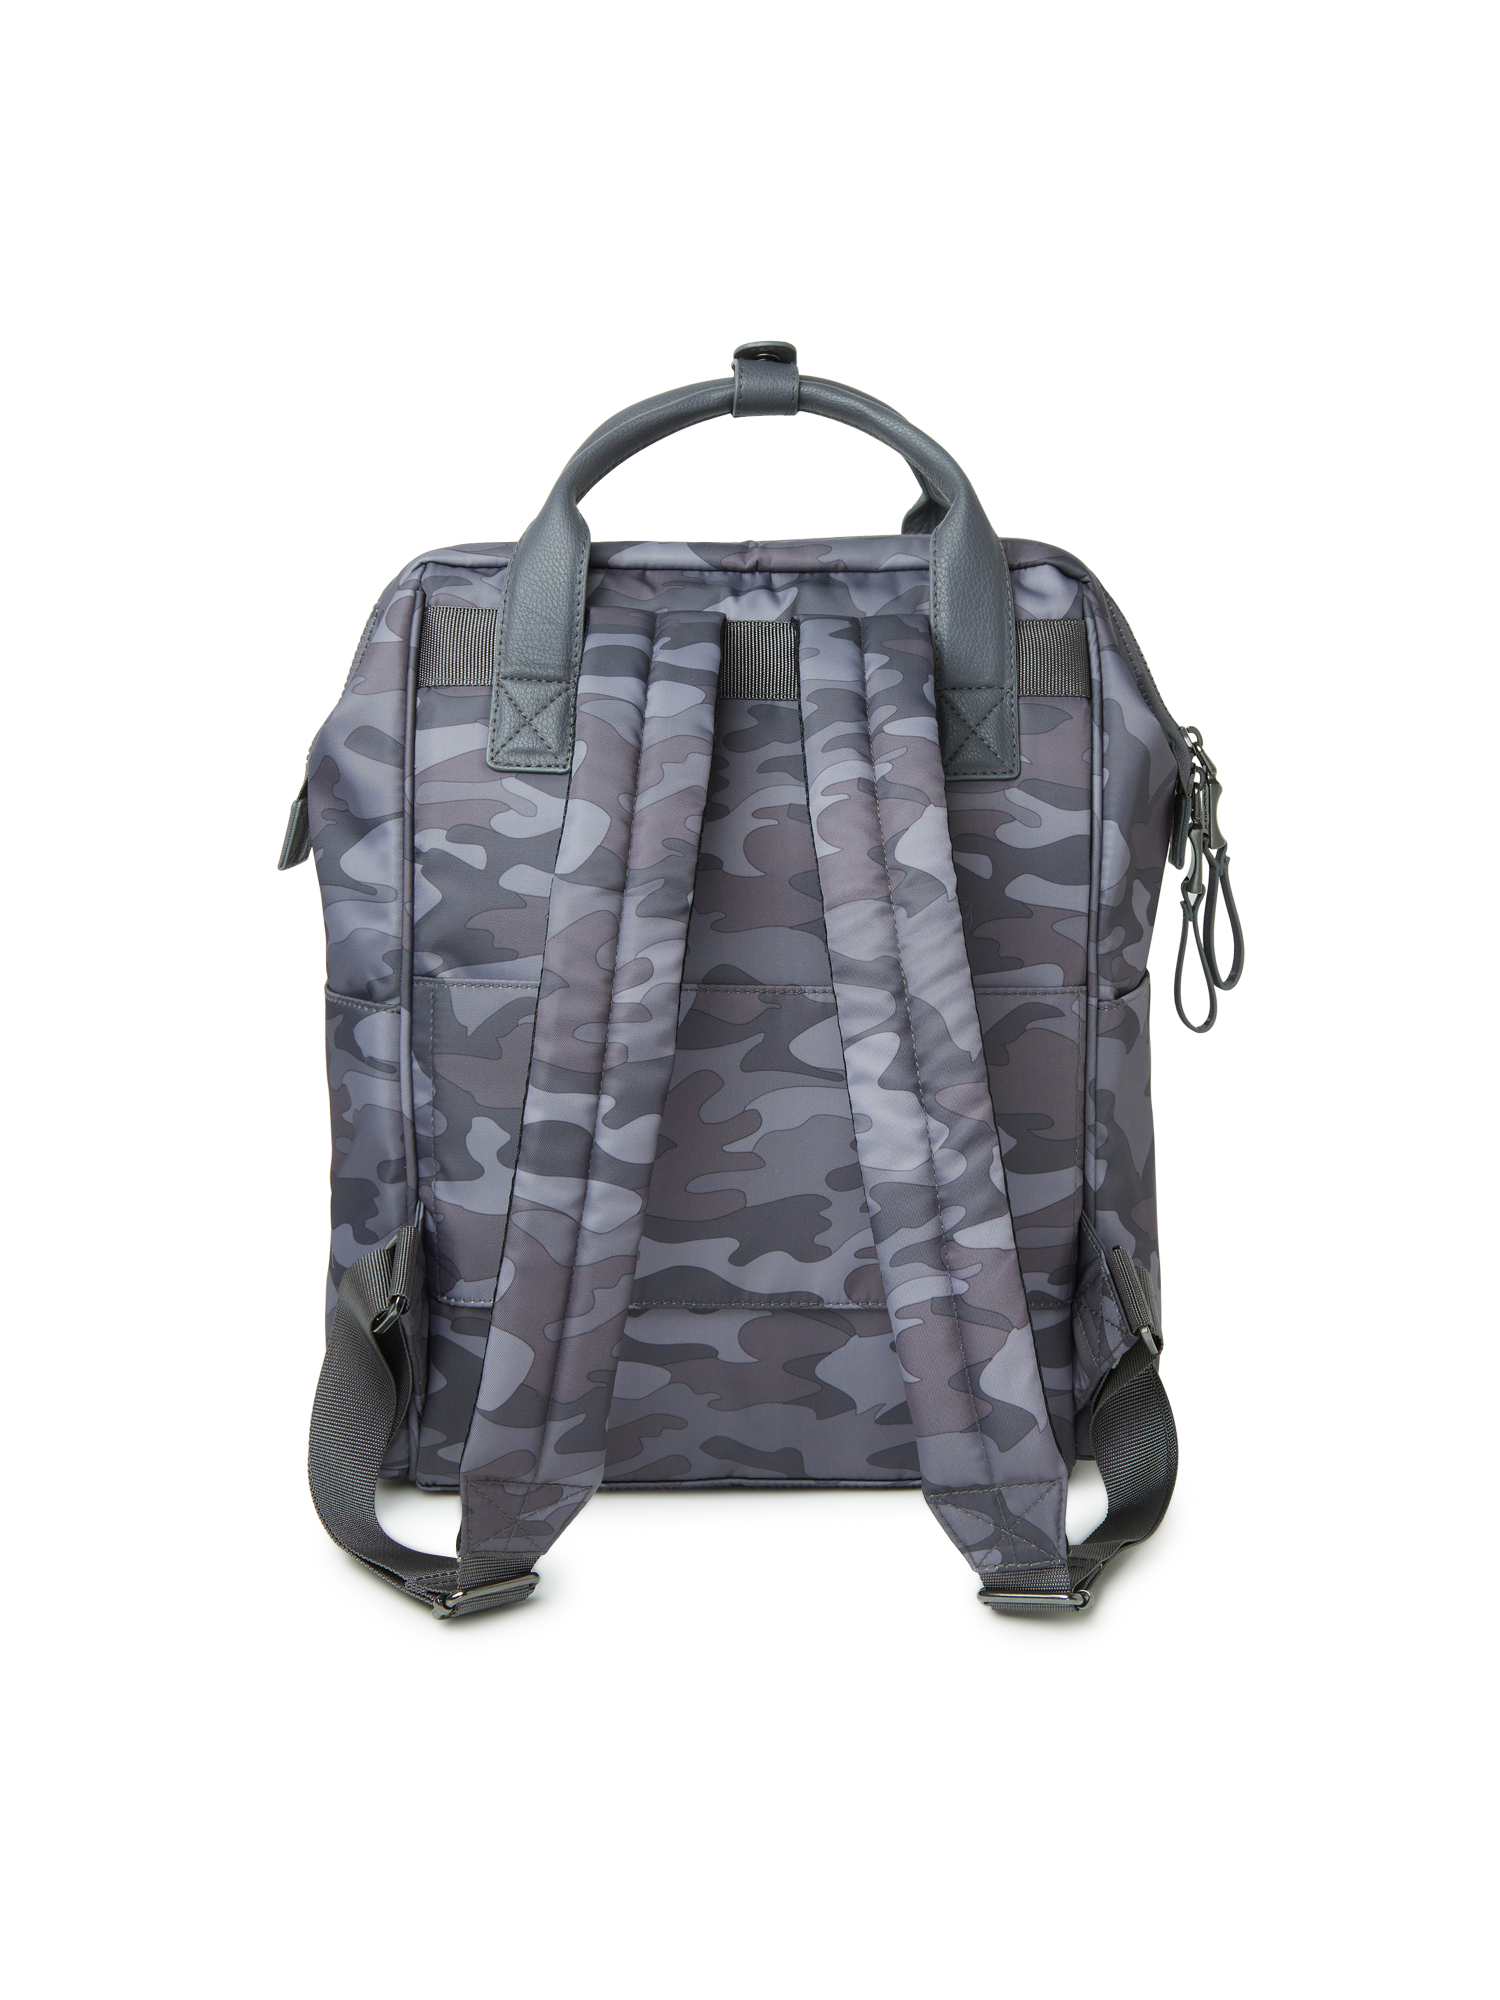 baggallini Nylon Soho Backpack Smoke/Faux Python for sale online | eBay